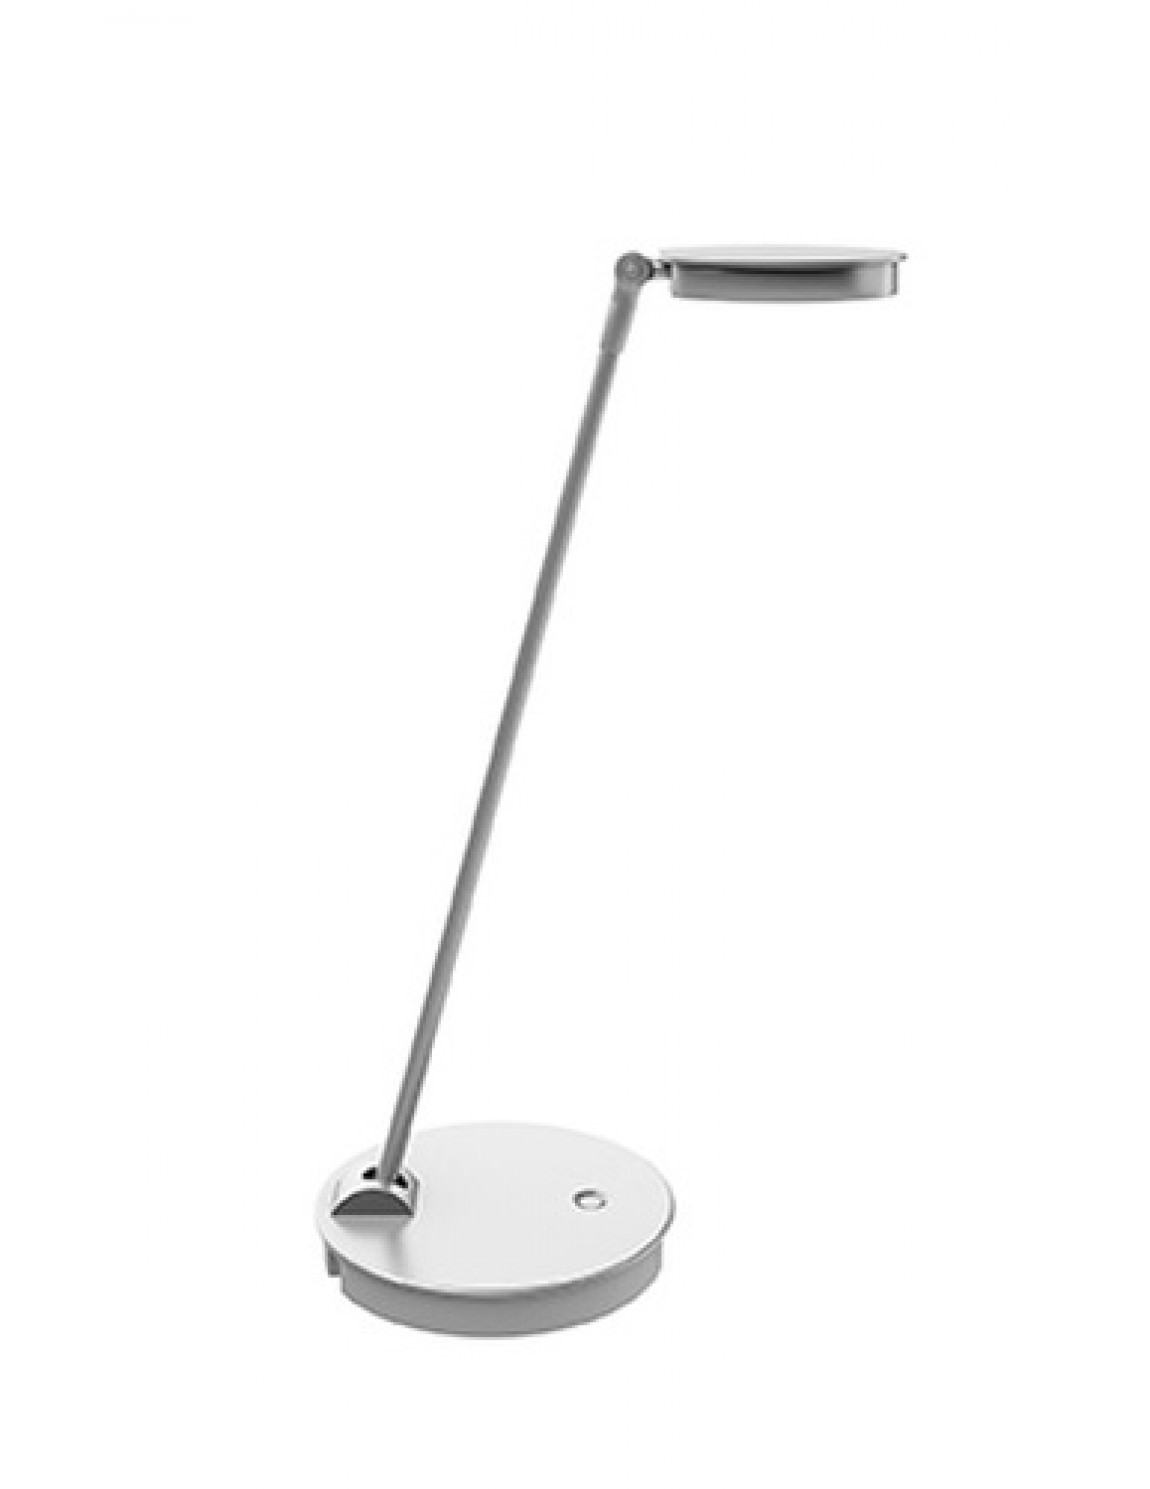 Single Arm LED Desk Lamp with USB